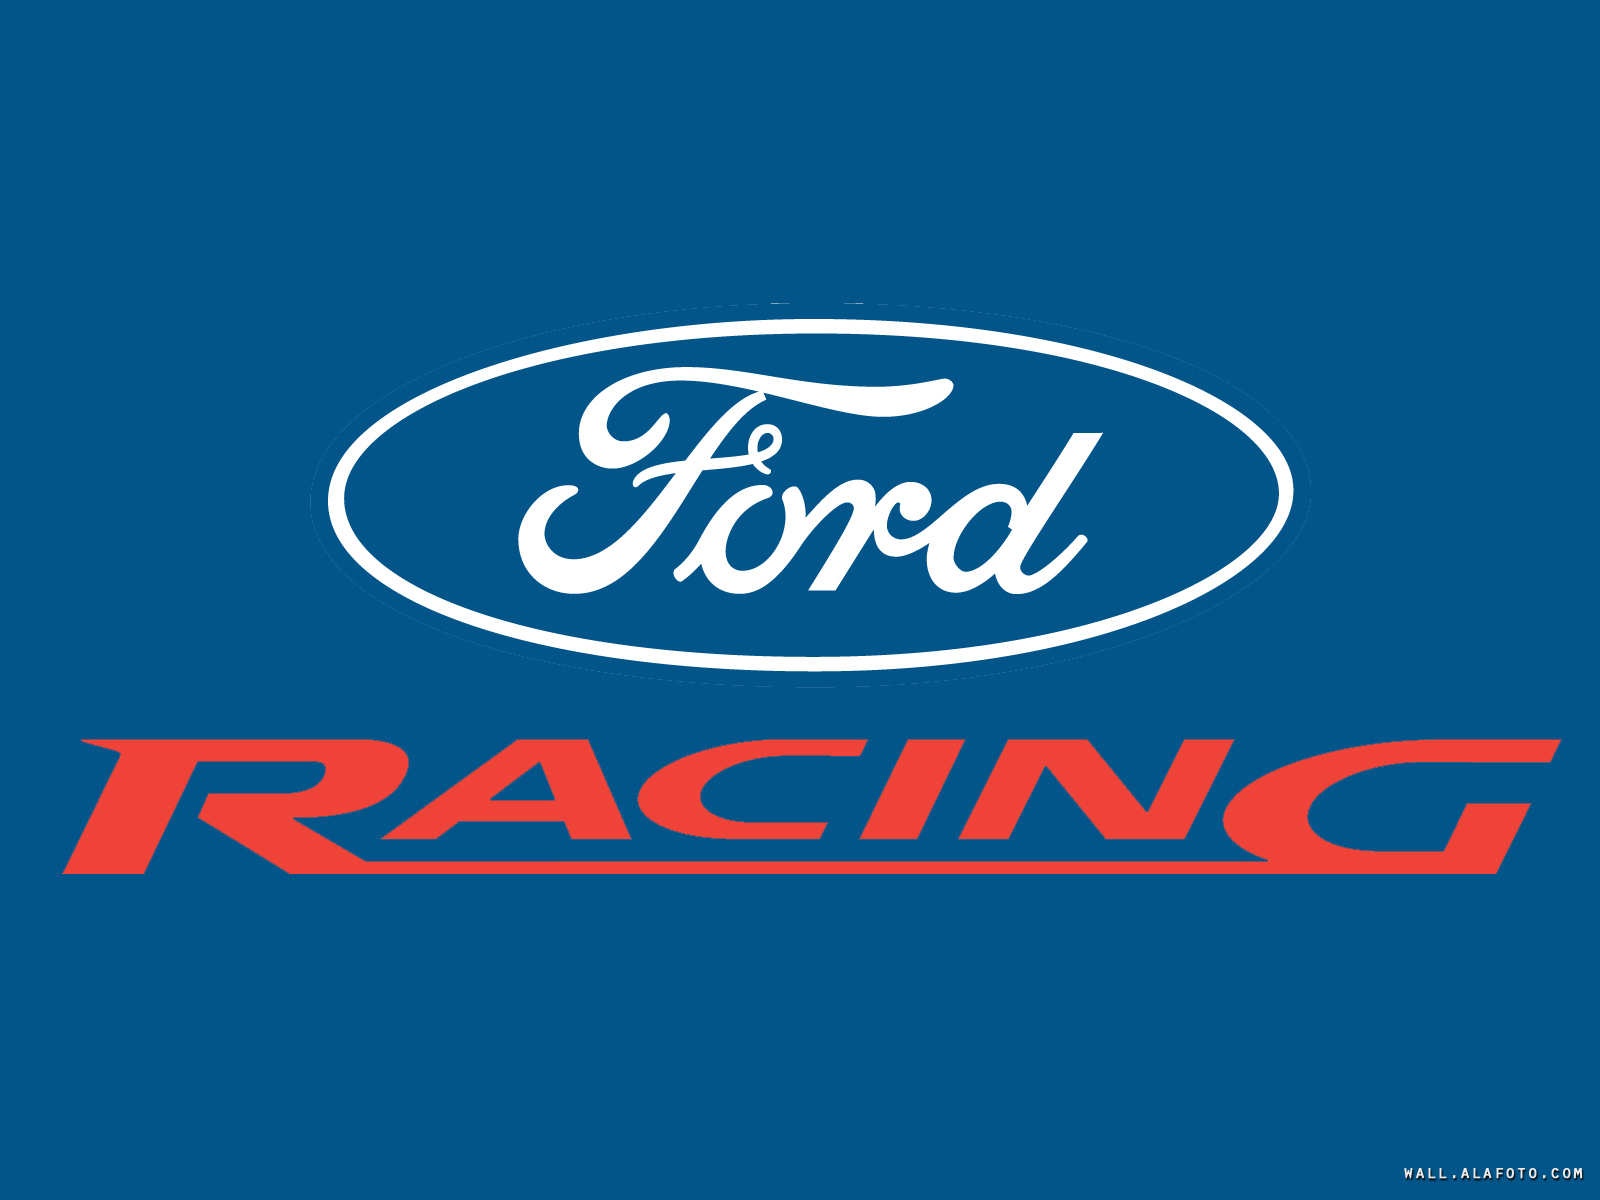 Ford Cars Logos   Ford logo 101   Alafoto Wallpapers